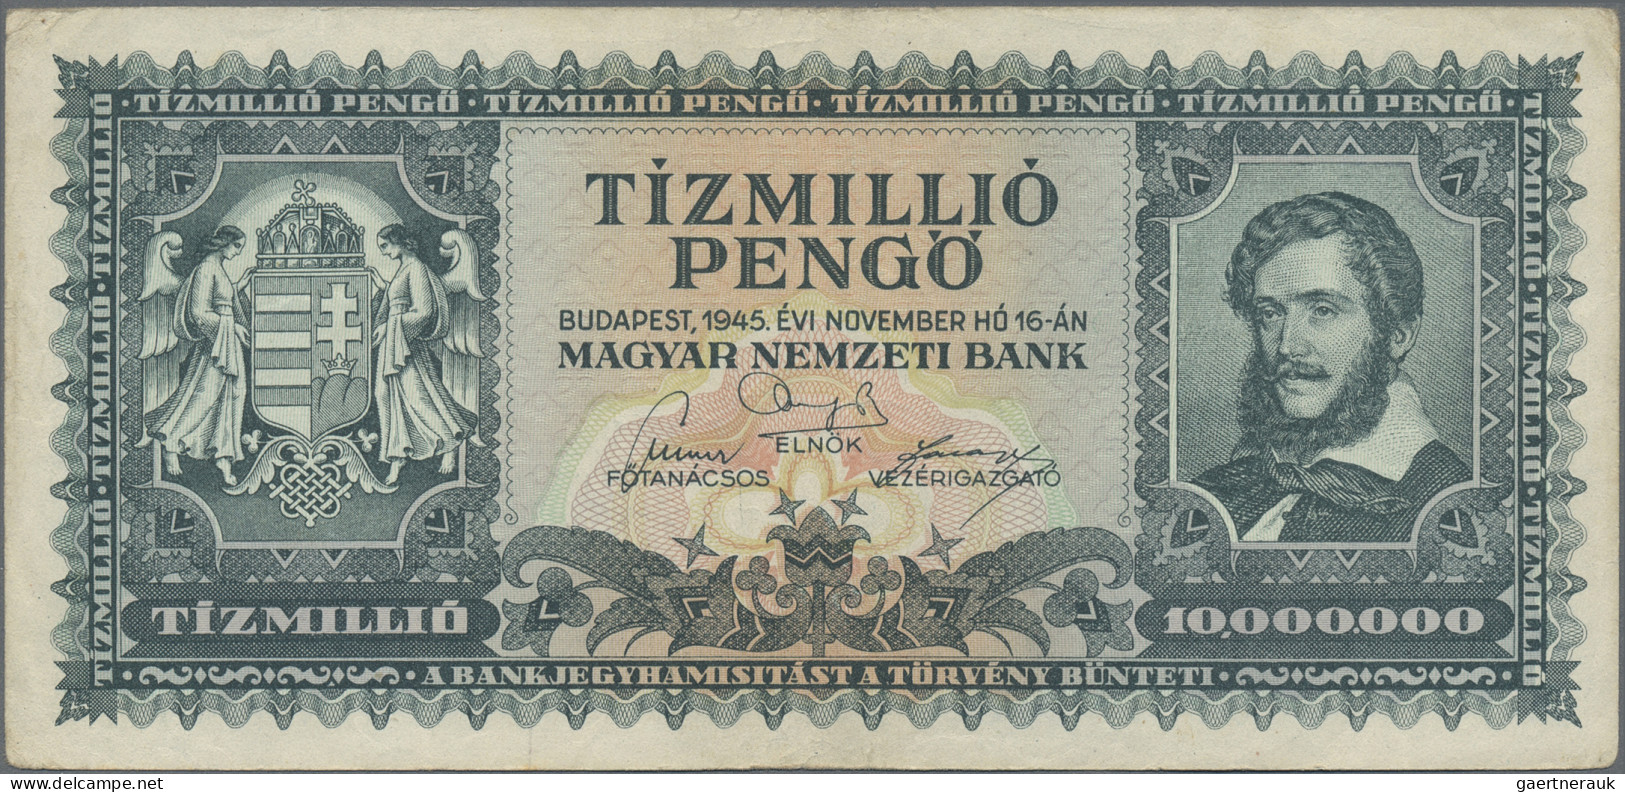 Hungary: Hungary, Inflation Lot With 13 Banknotes 1945-1946 Series, 500 Pengö – - Hungary